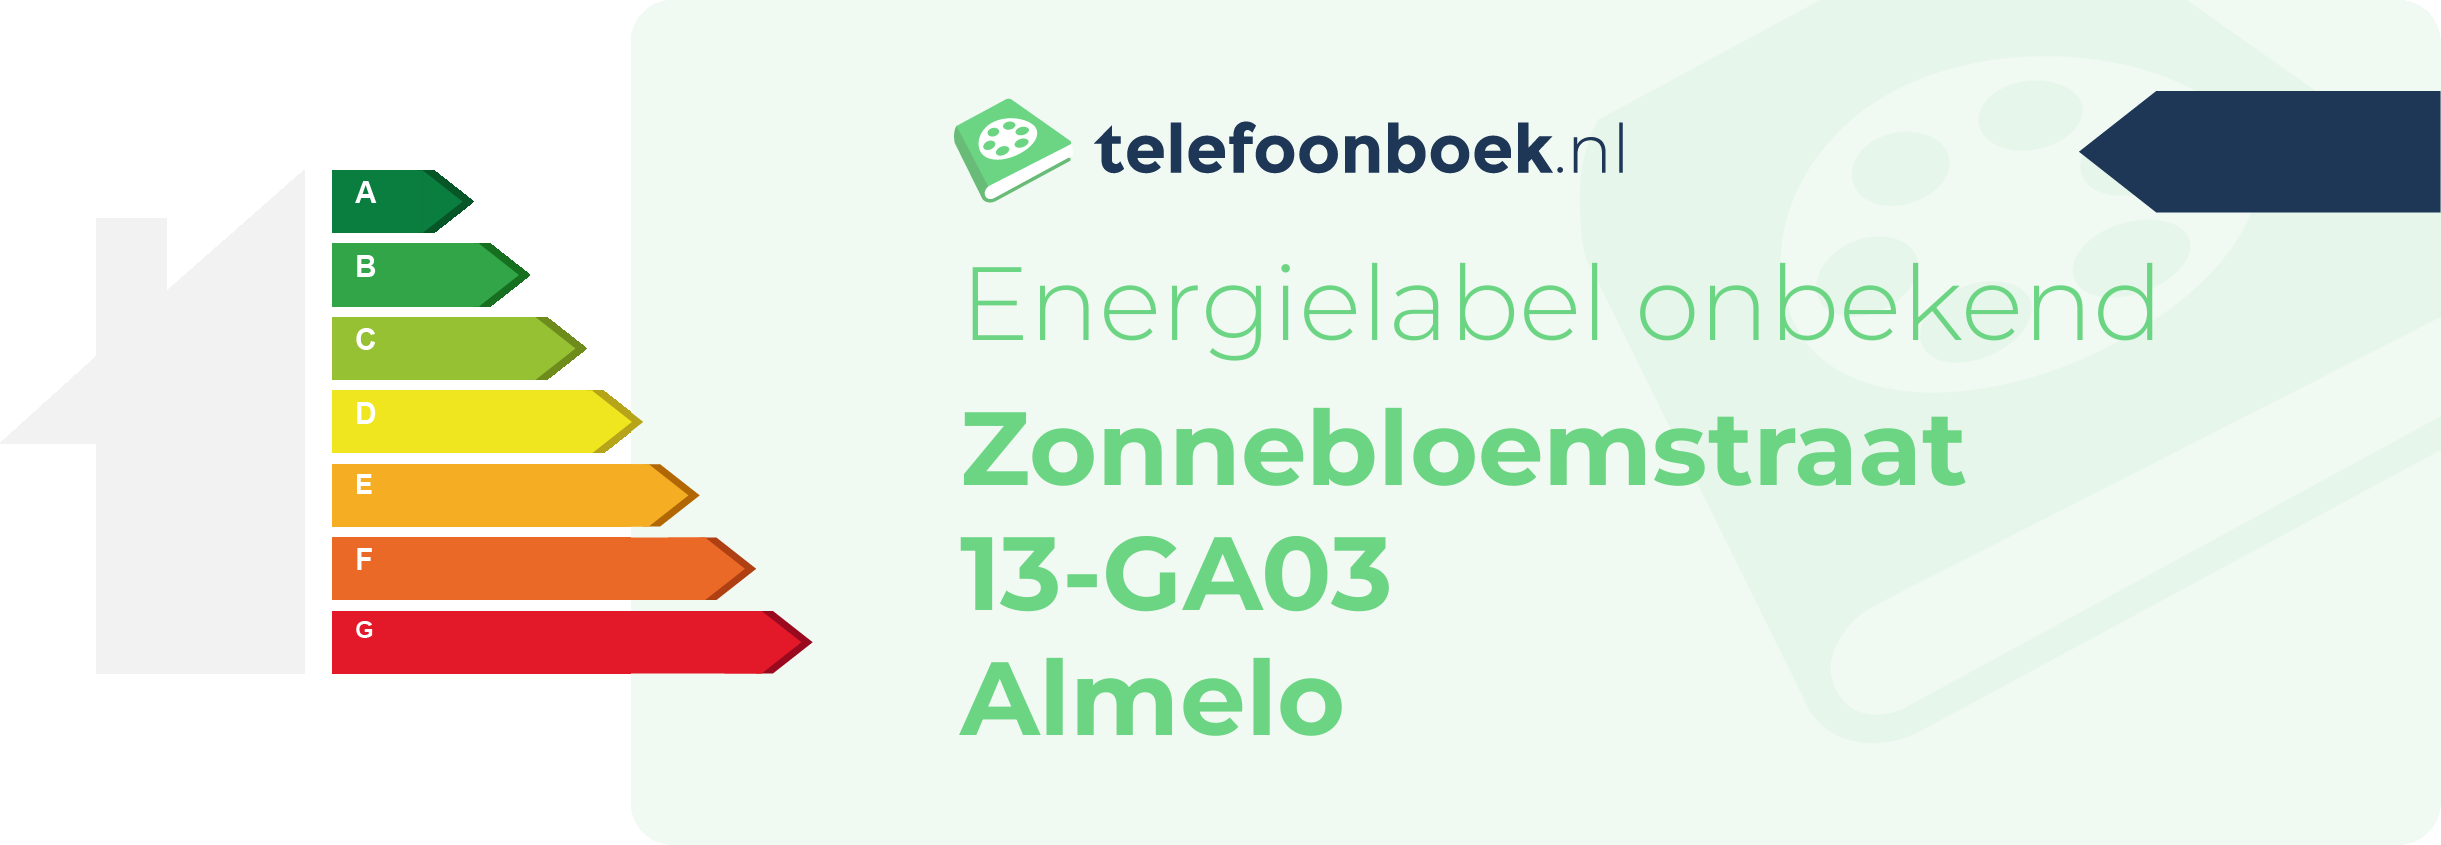 Energielabel Zonnebloemstraat 13-GA03 Almelo